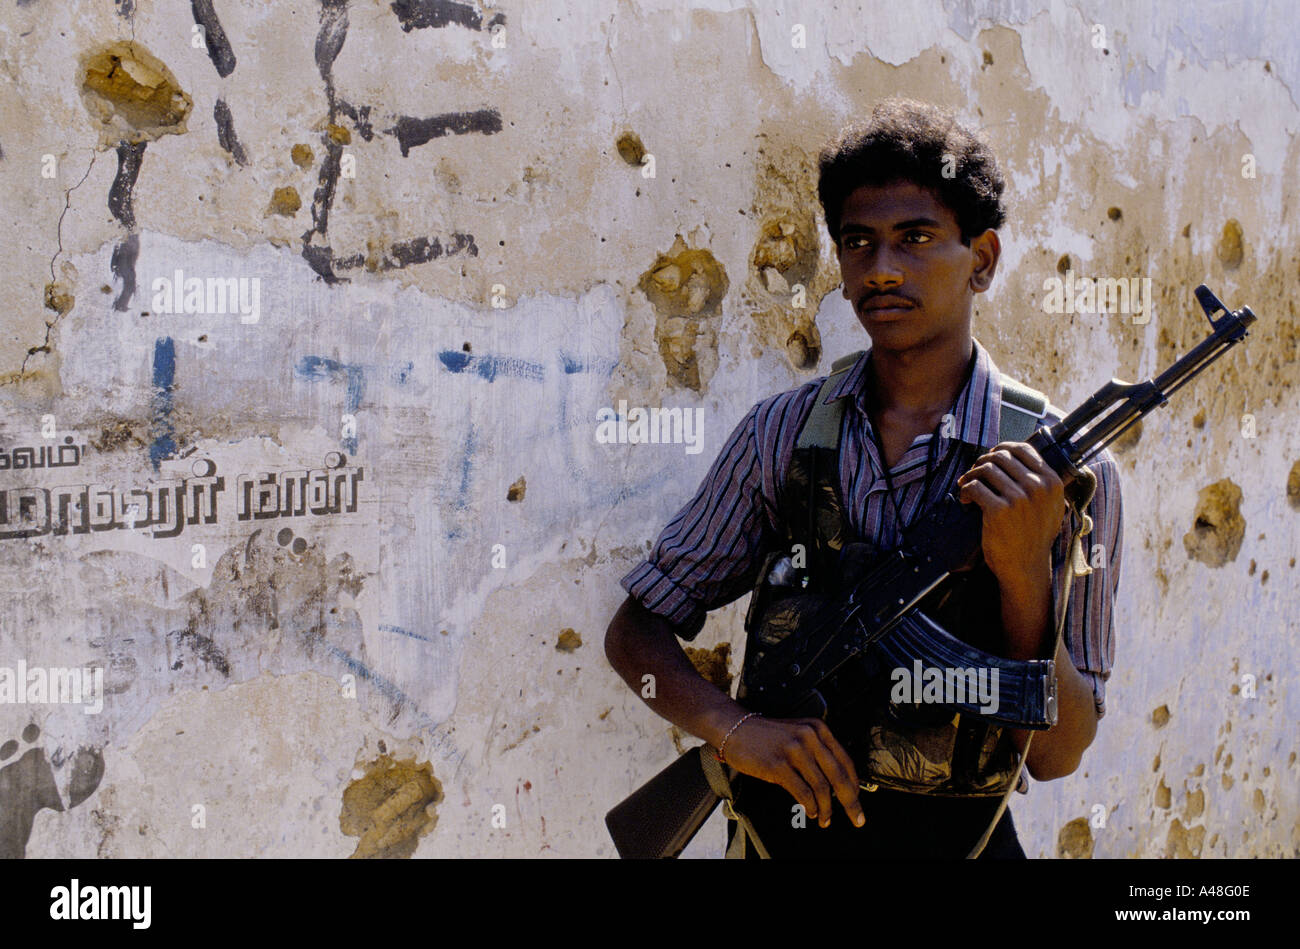 Un commando des Tigres tamouls pose devant un mur de slogans politiques de la péninsule de Jaffna au Sri Lanka Banque D'Images